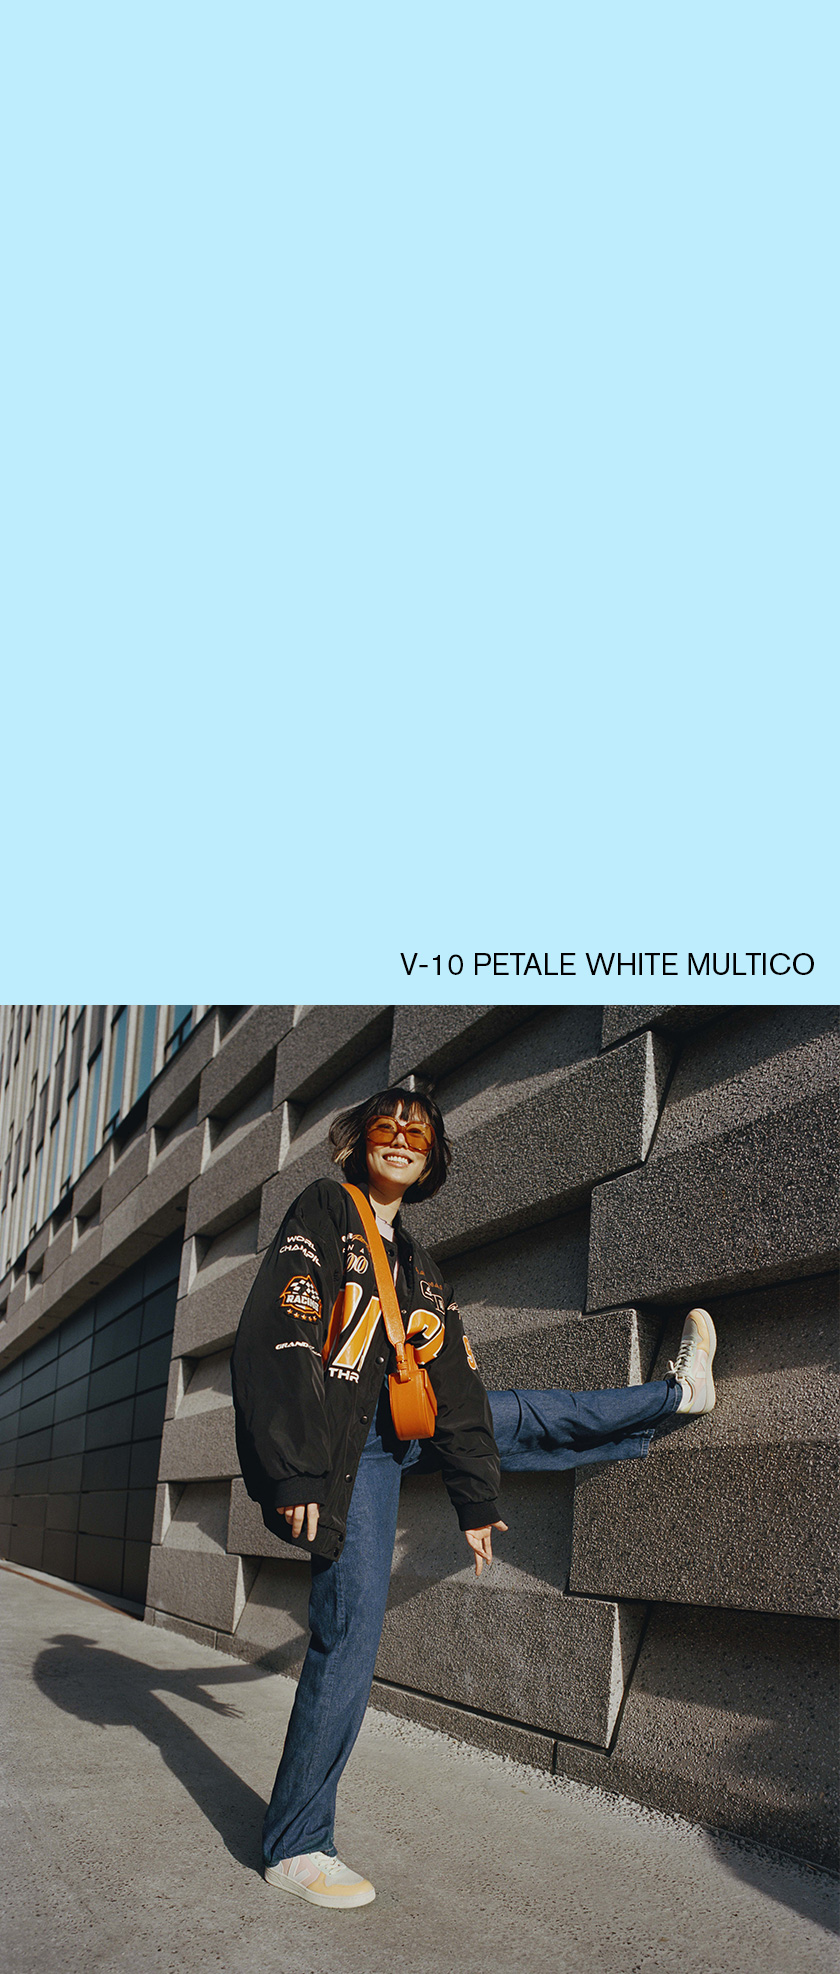 v-10 cuir petale white multico